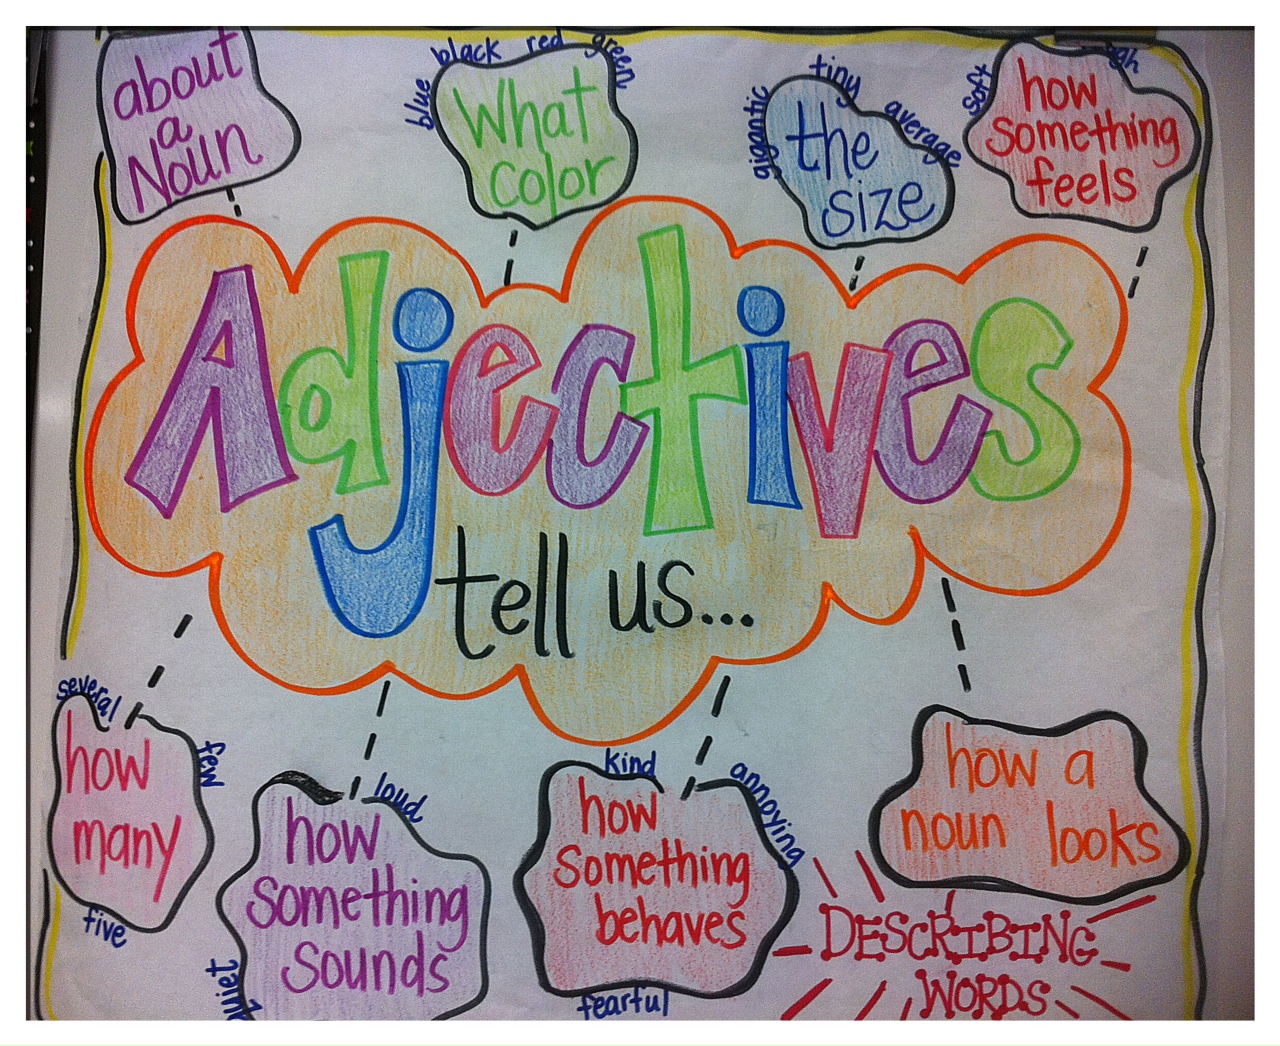 Resume characteristics adjectives